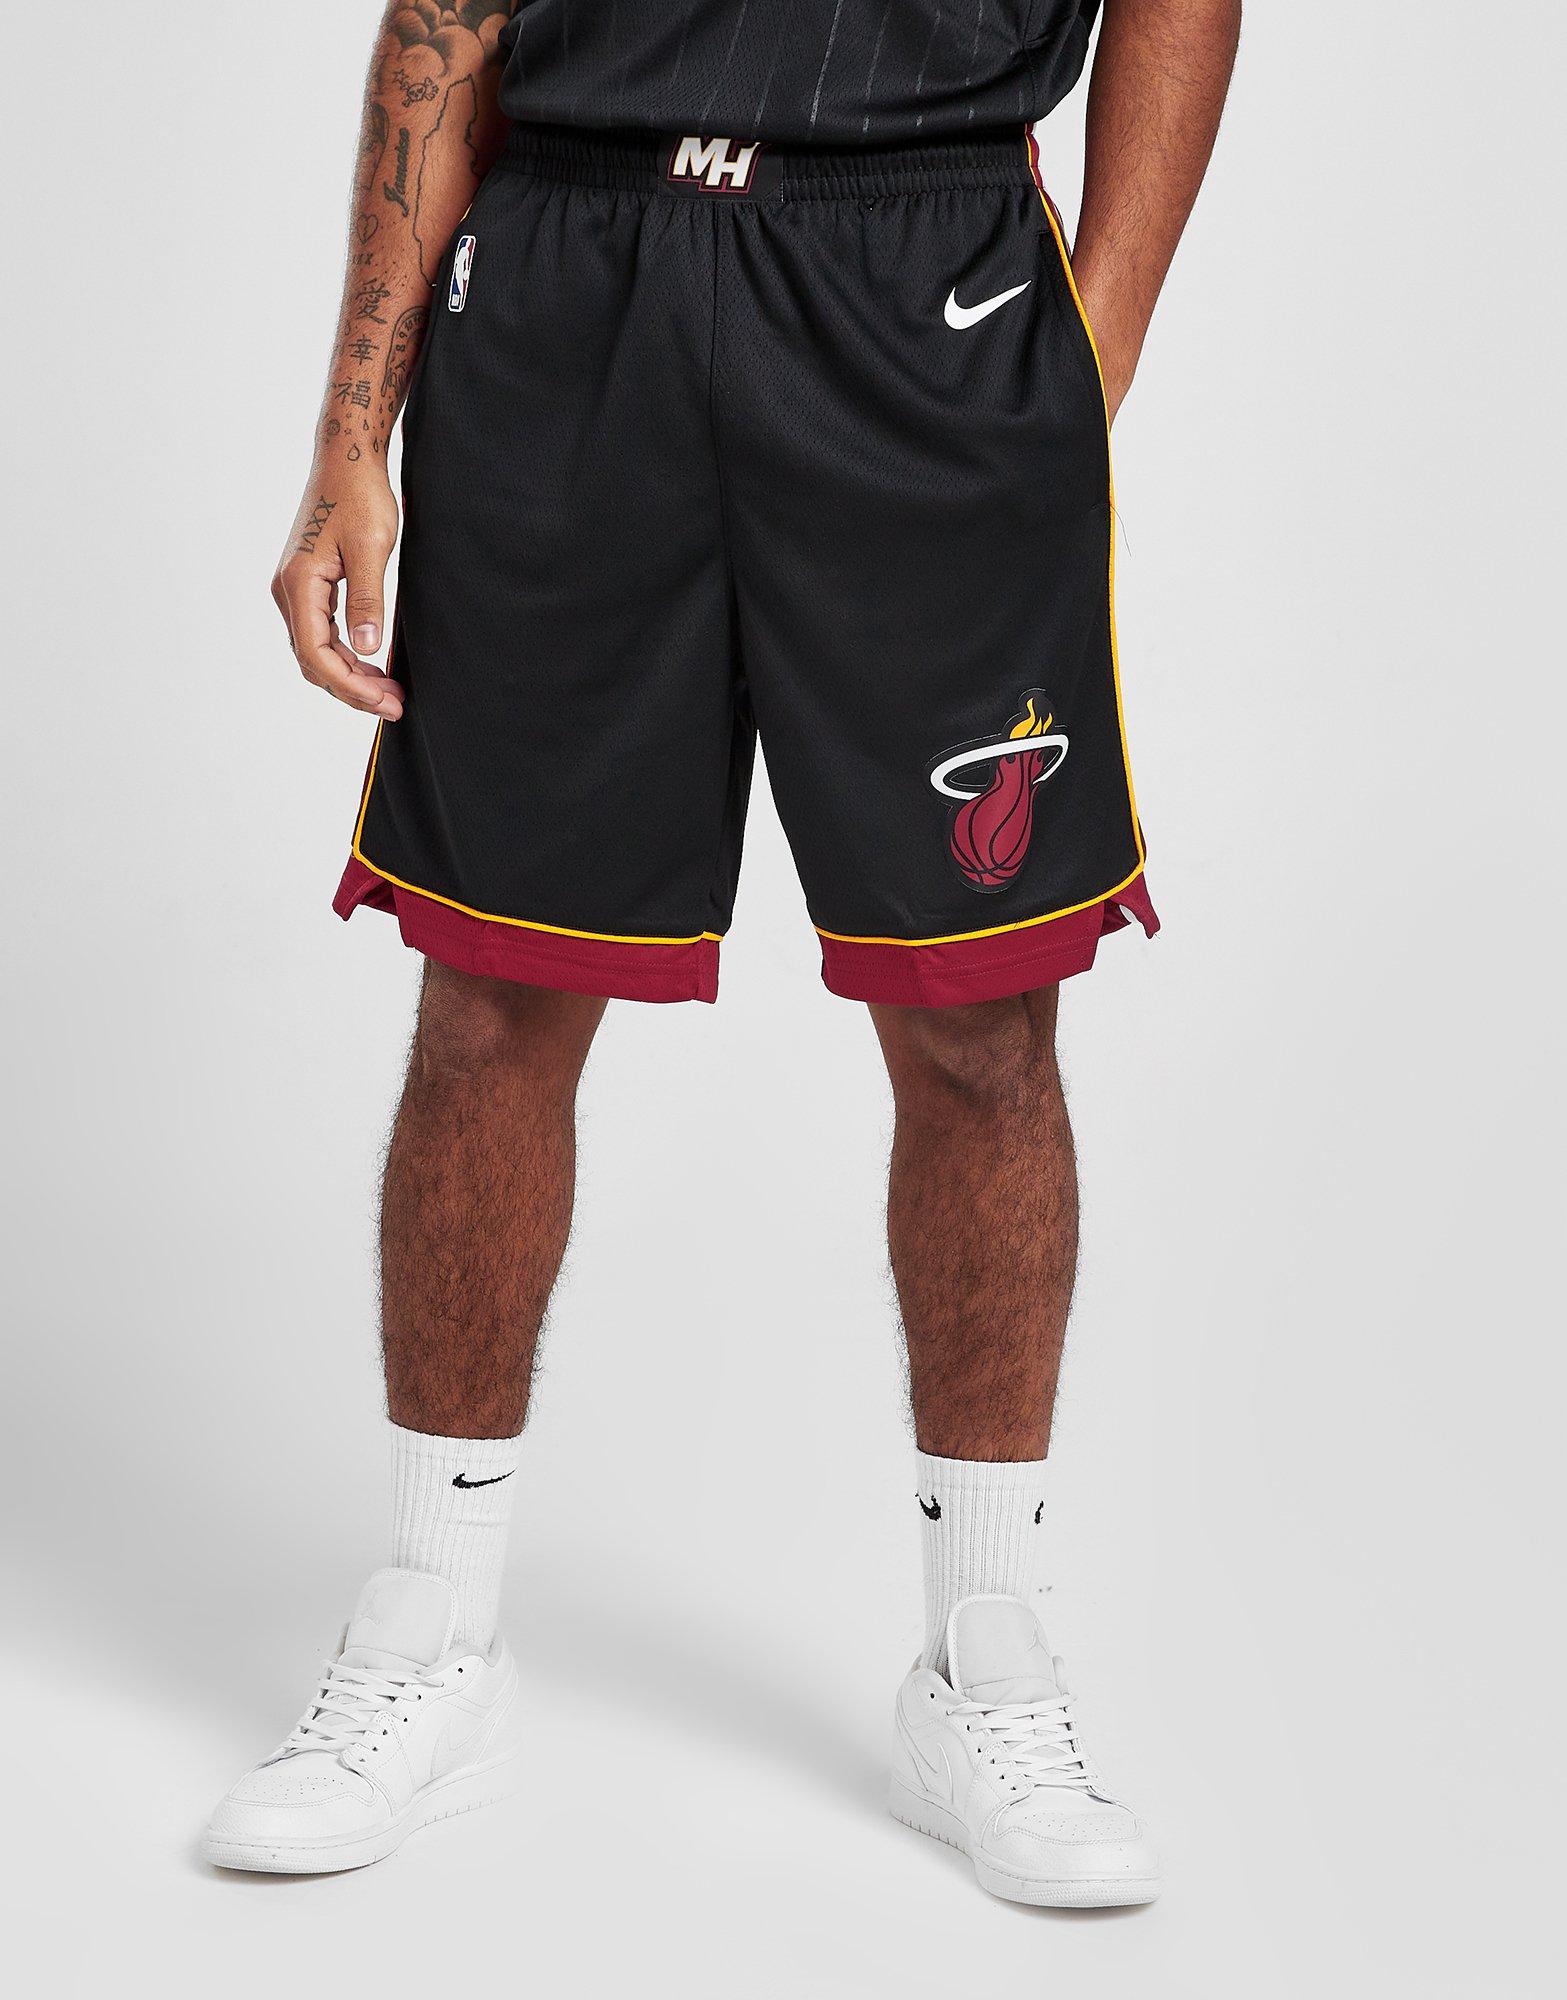 pub Estar confundido Suplemento Nike NBA Miami Heat Swingman Shorts en Negro | JD Sports España